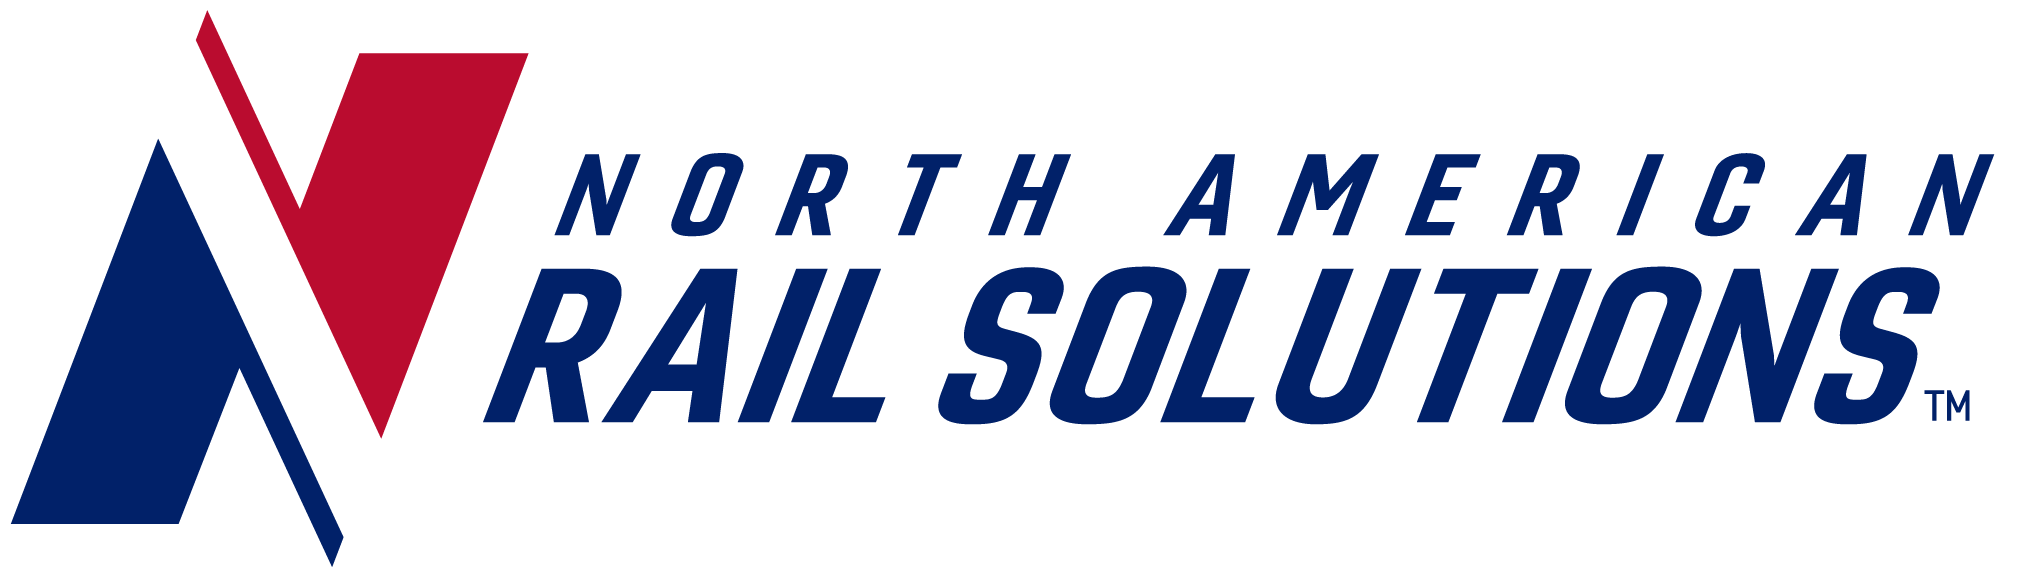 North Americian Rail Solutions